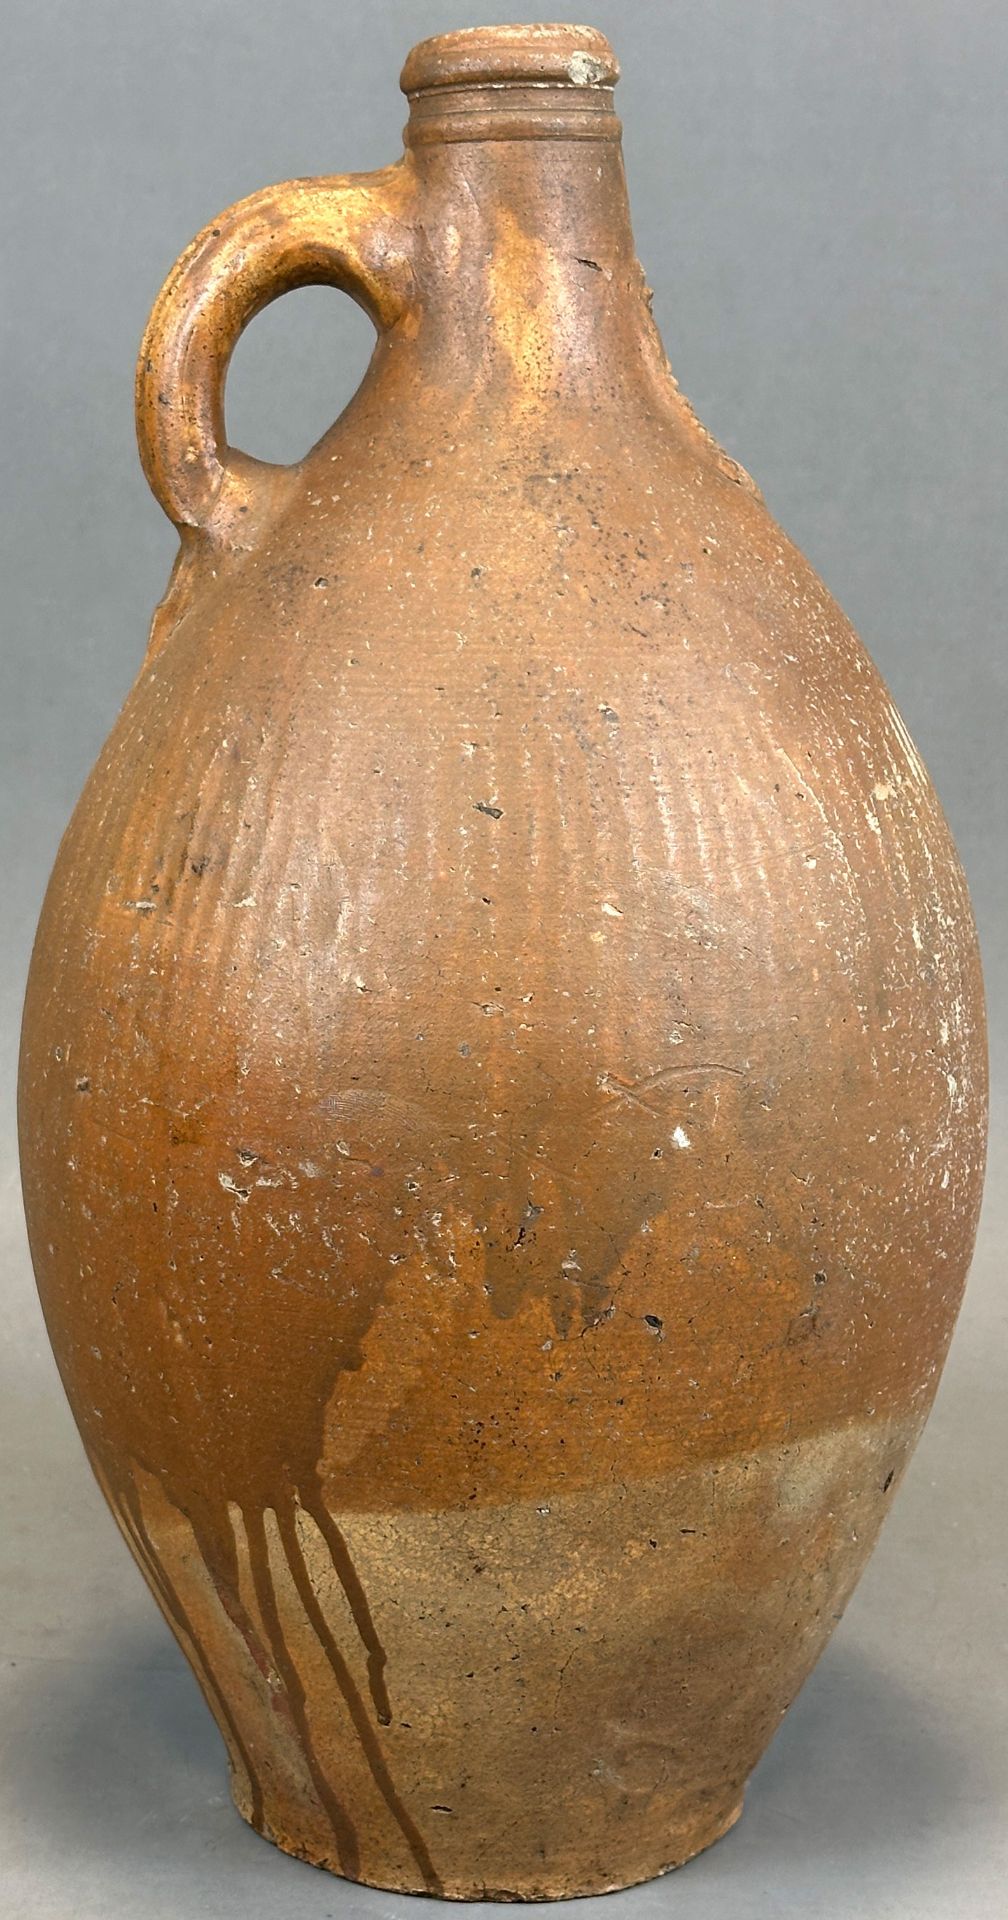 Large Bartmann jug. Frechen. 17th/18th century. - Image 4 of 10